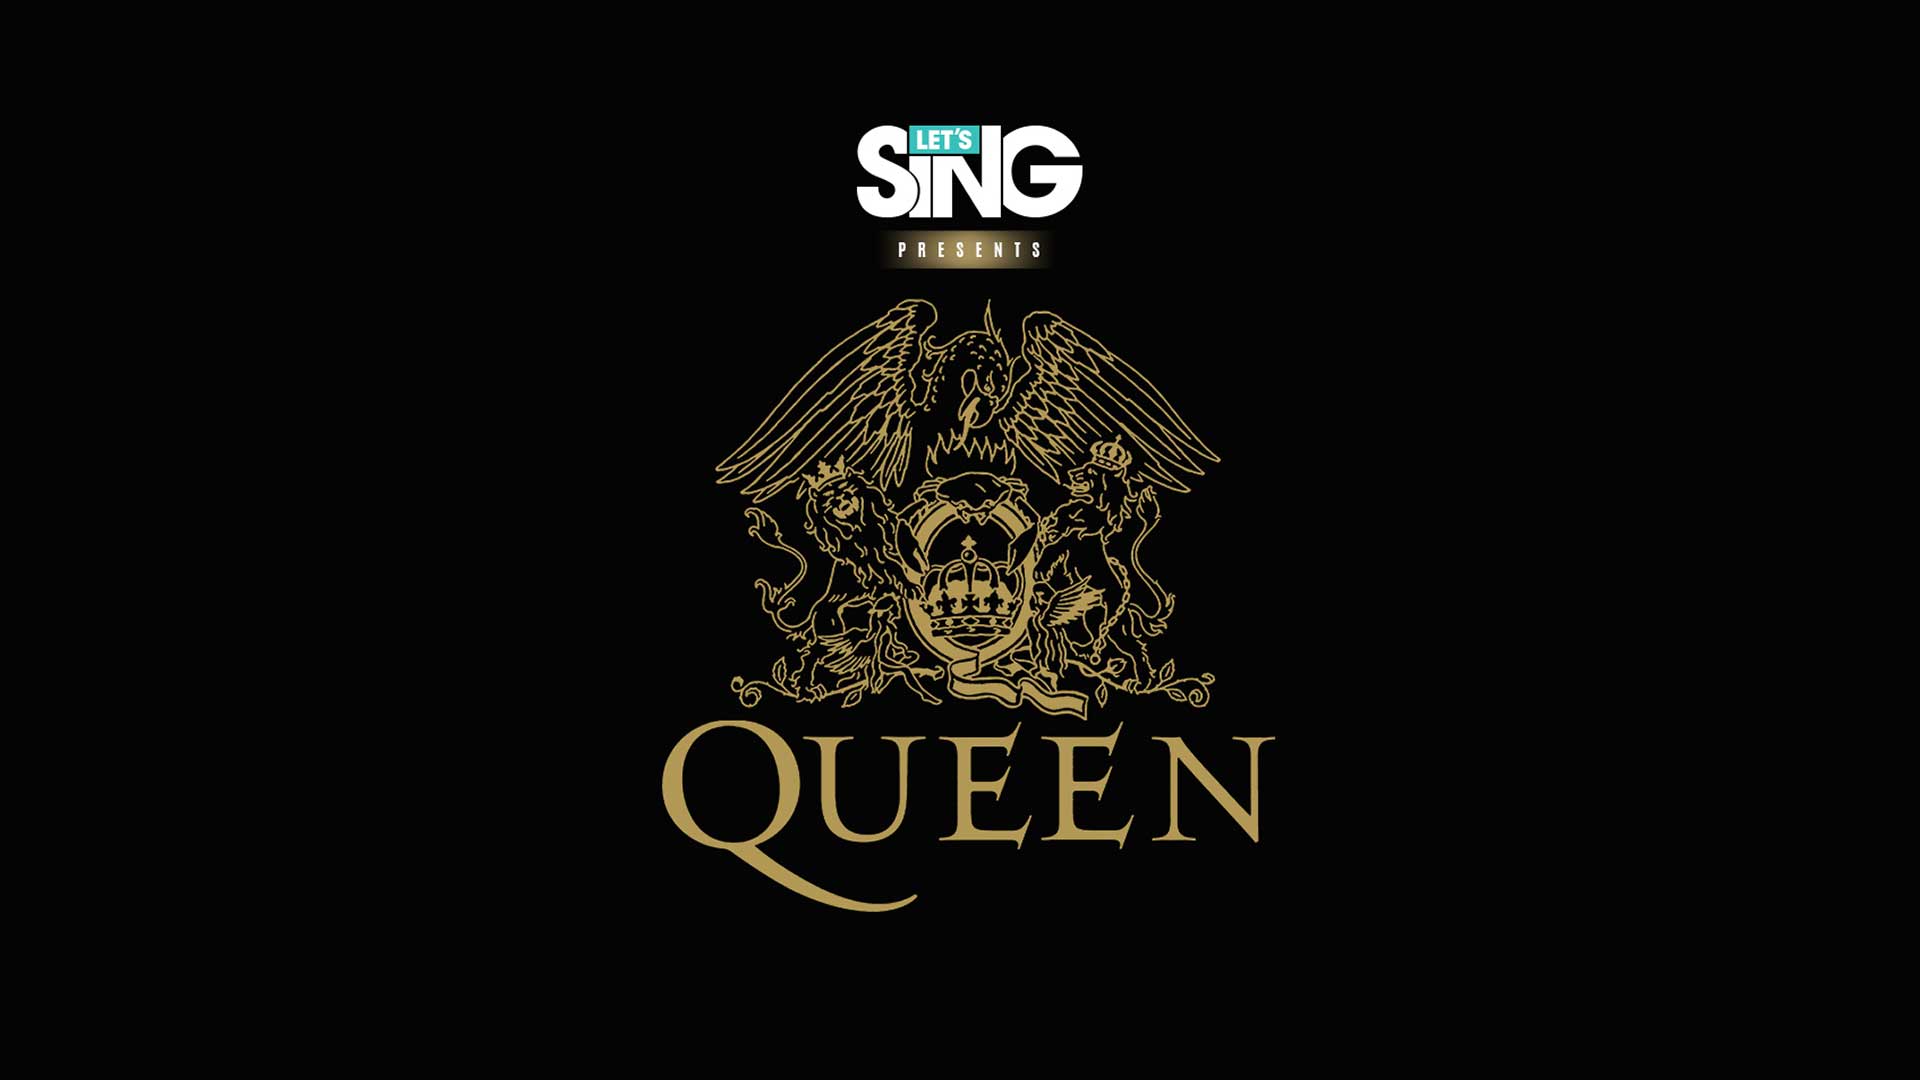 lets sing queen edition logo black